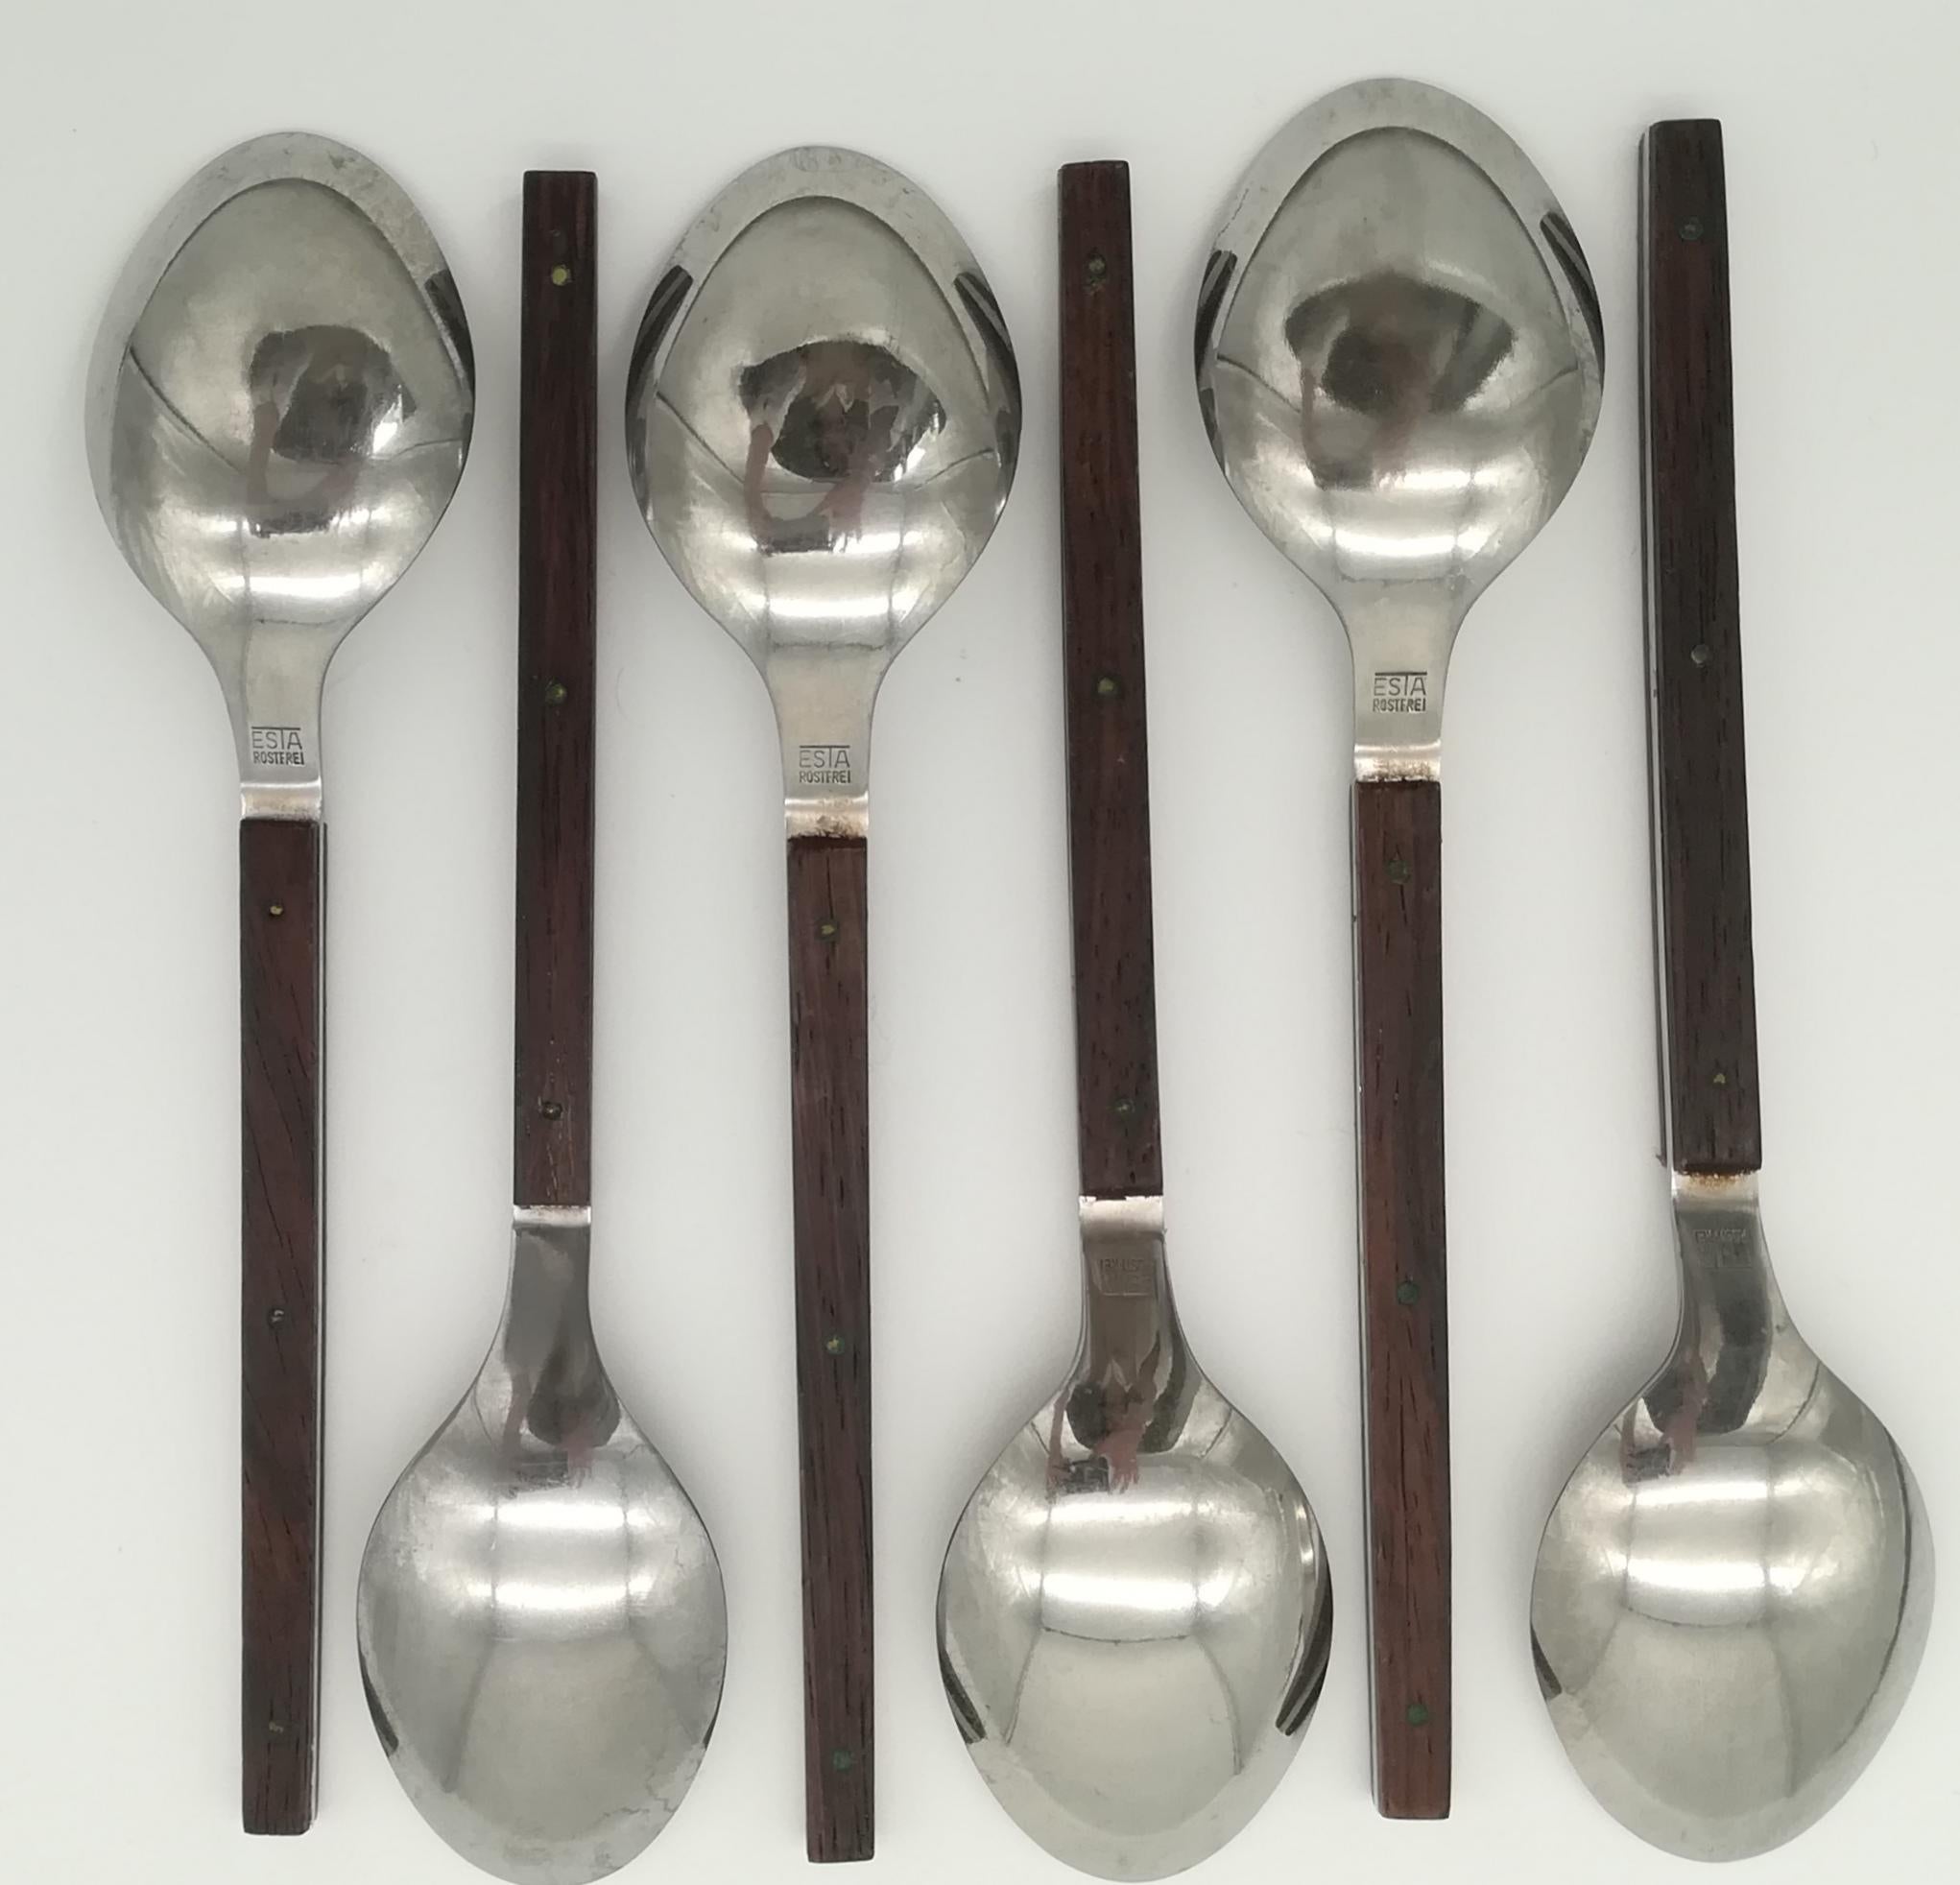 Vintage Cutlery Set by Helmut Alder for Esta, Sub-Brand of Amboss Austria For Sale 1